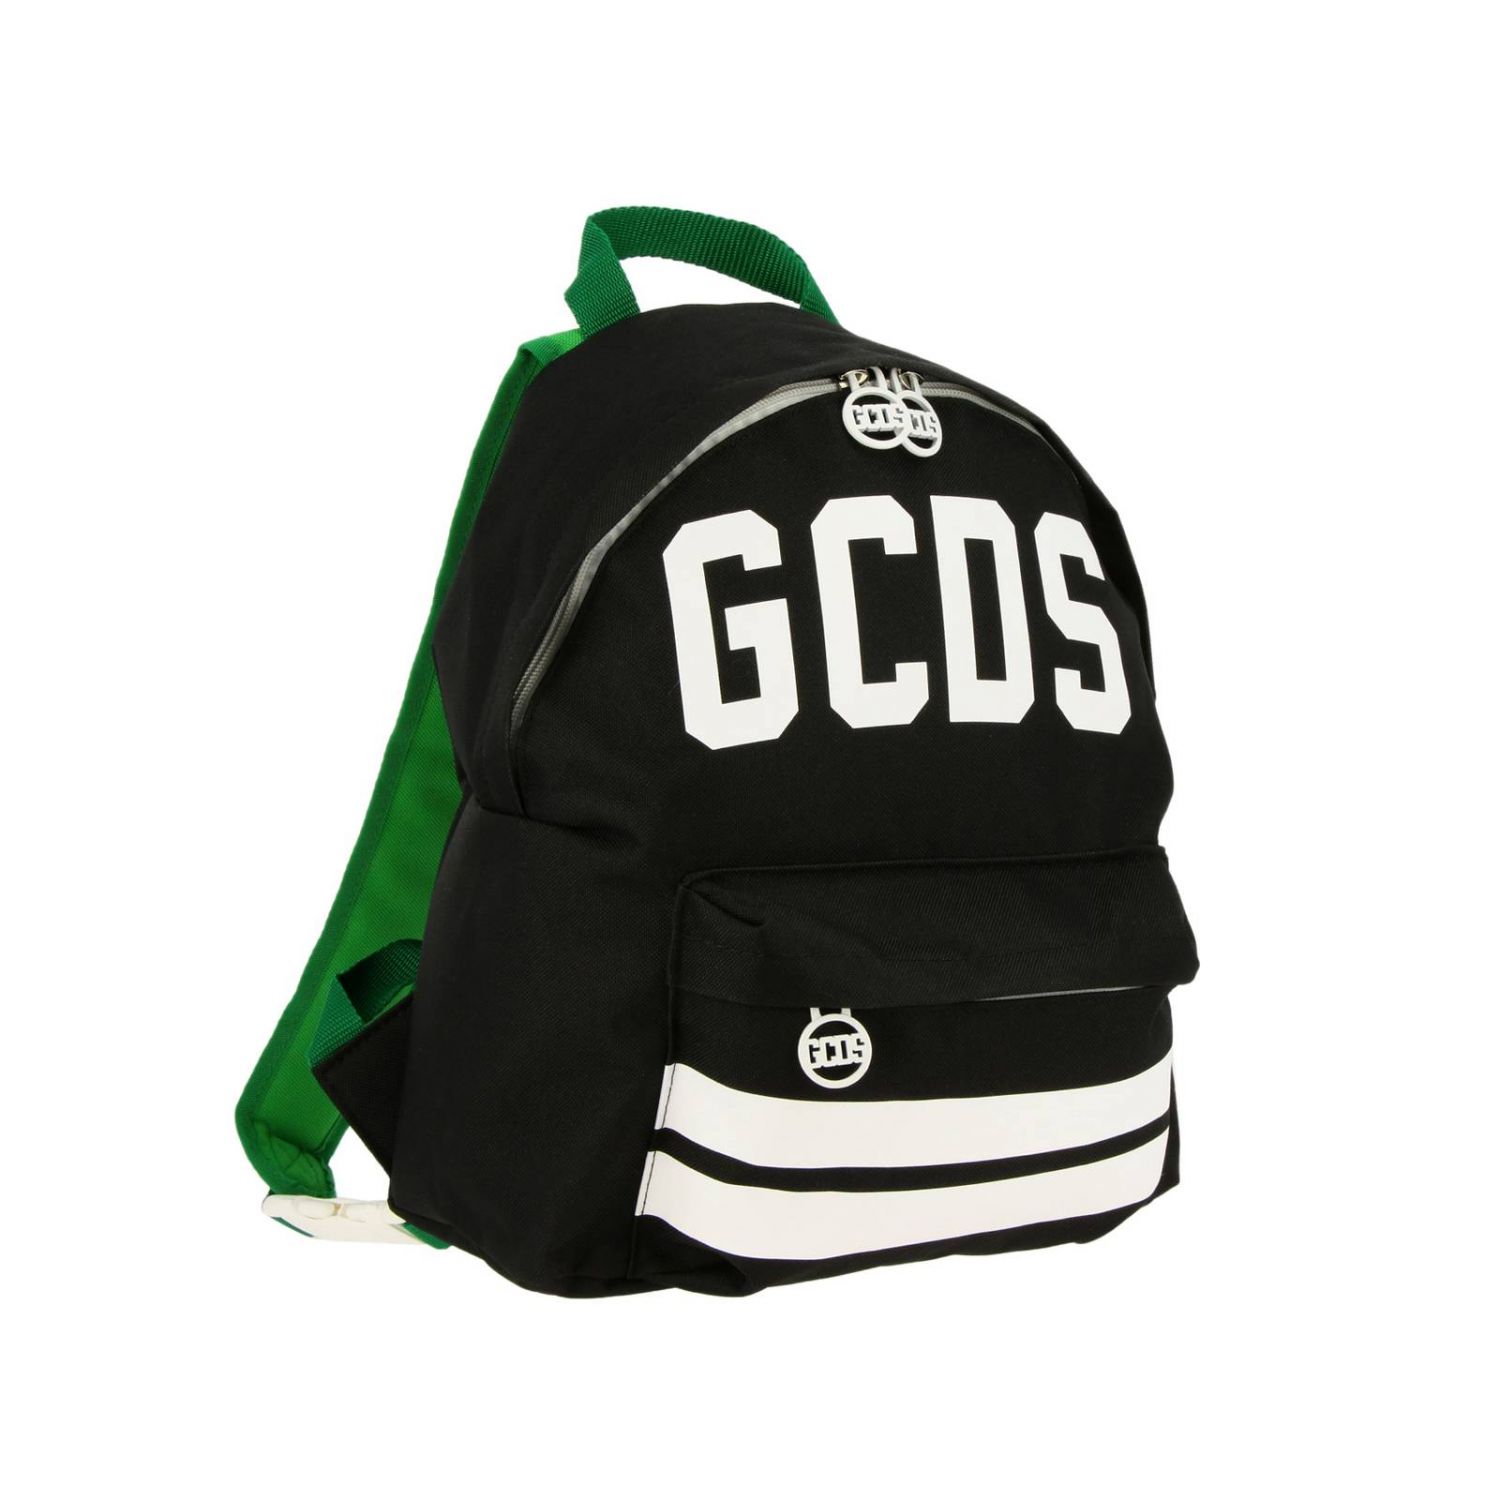 Gcds Outlet: duffel bag for kids - Black | Gcds duffel bag 019434 ...